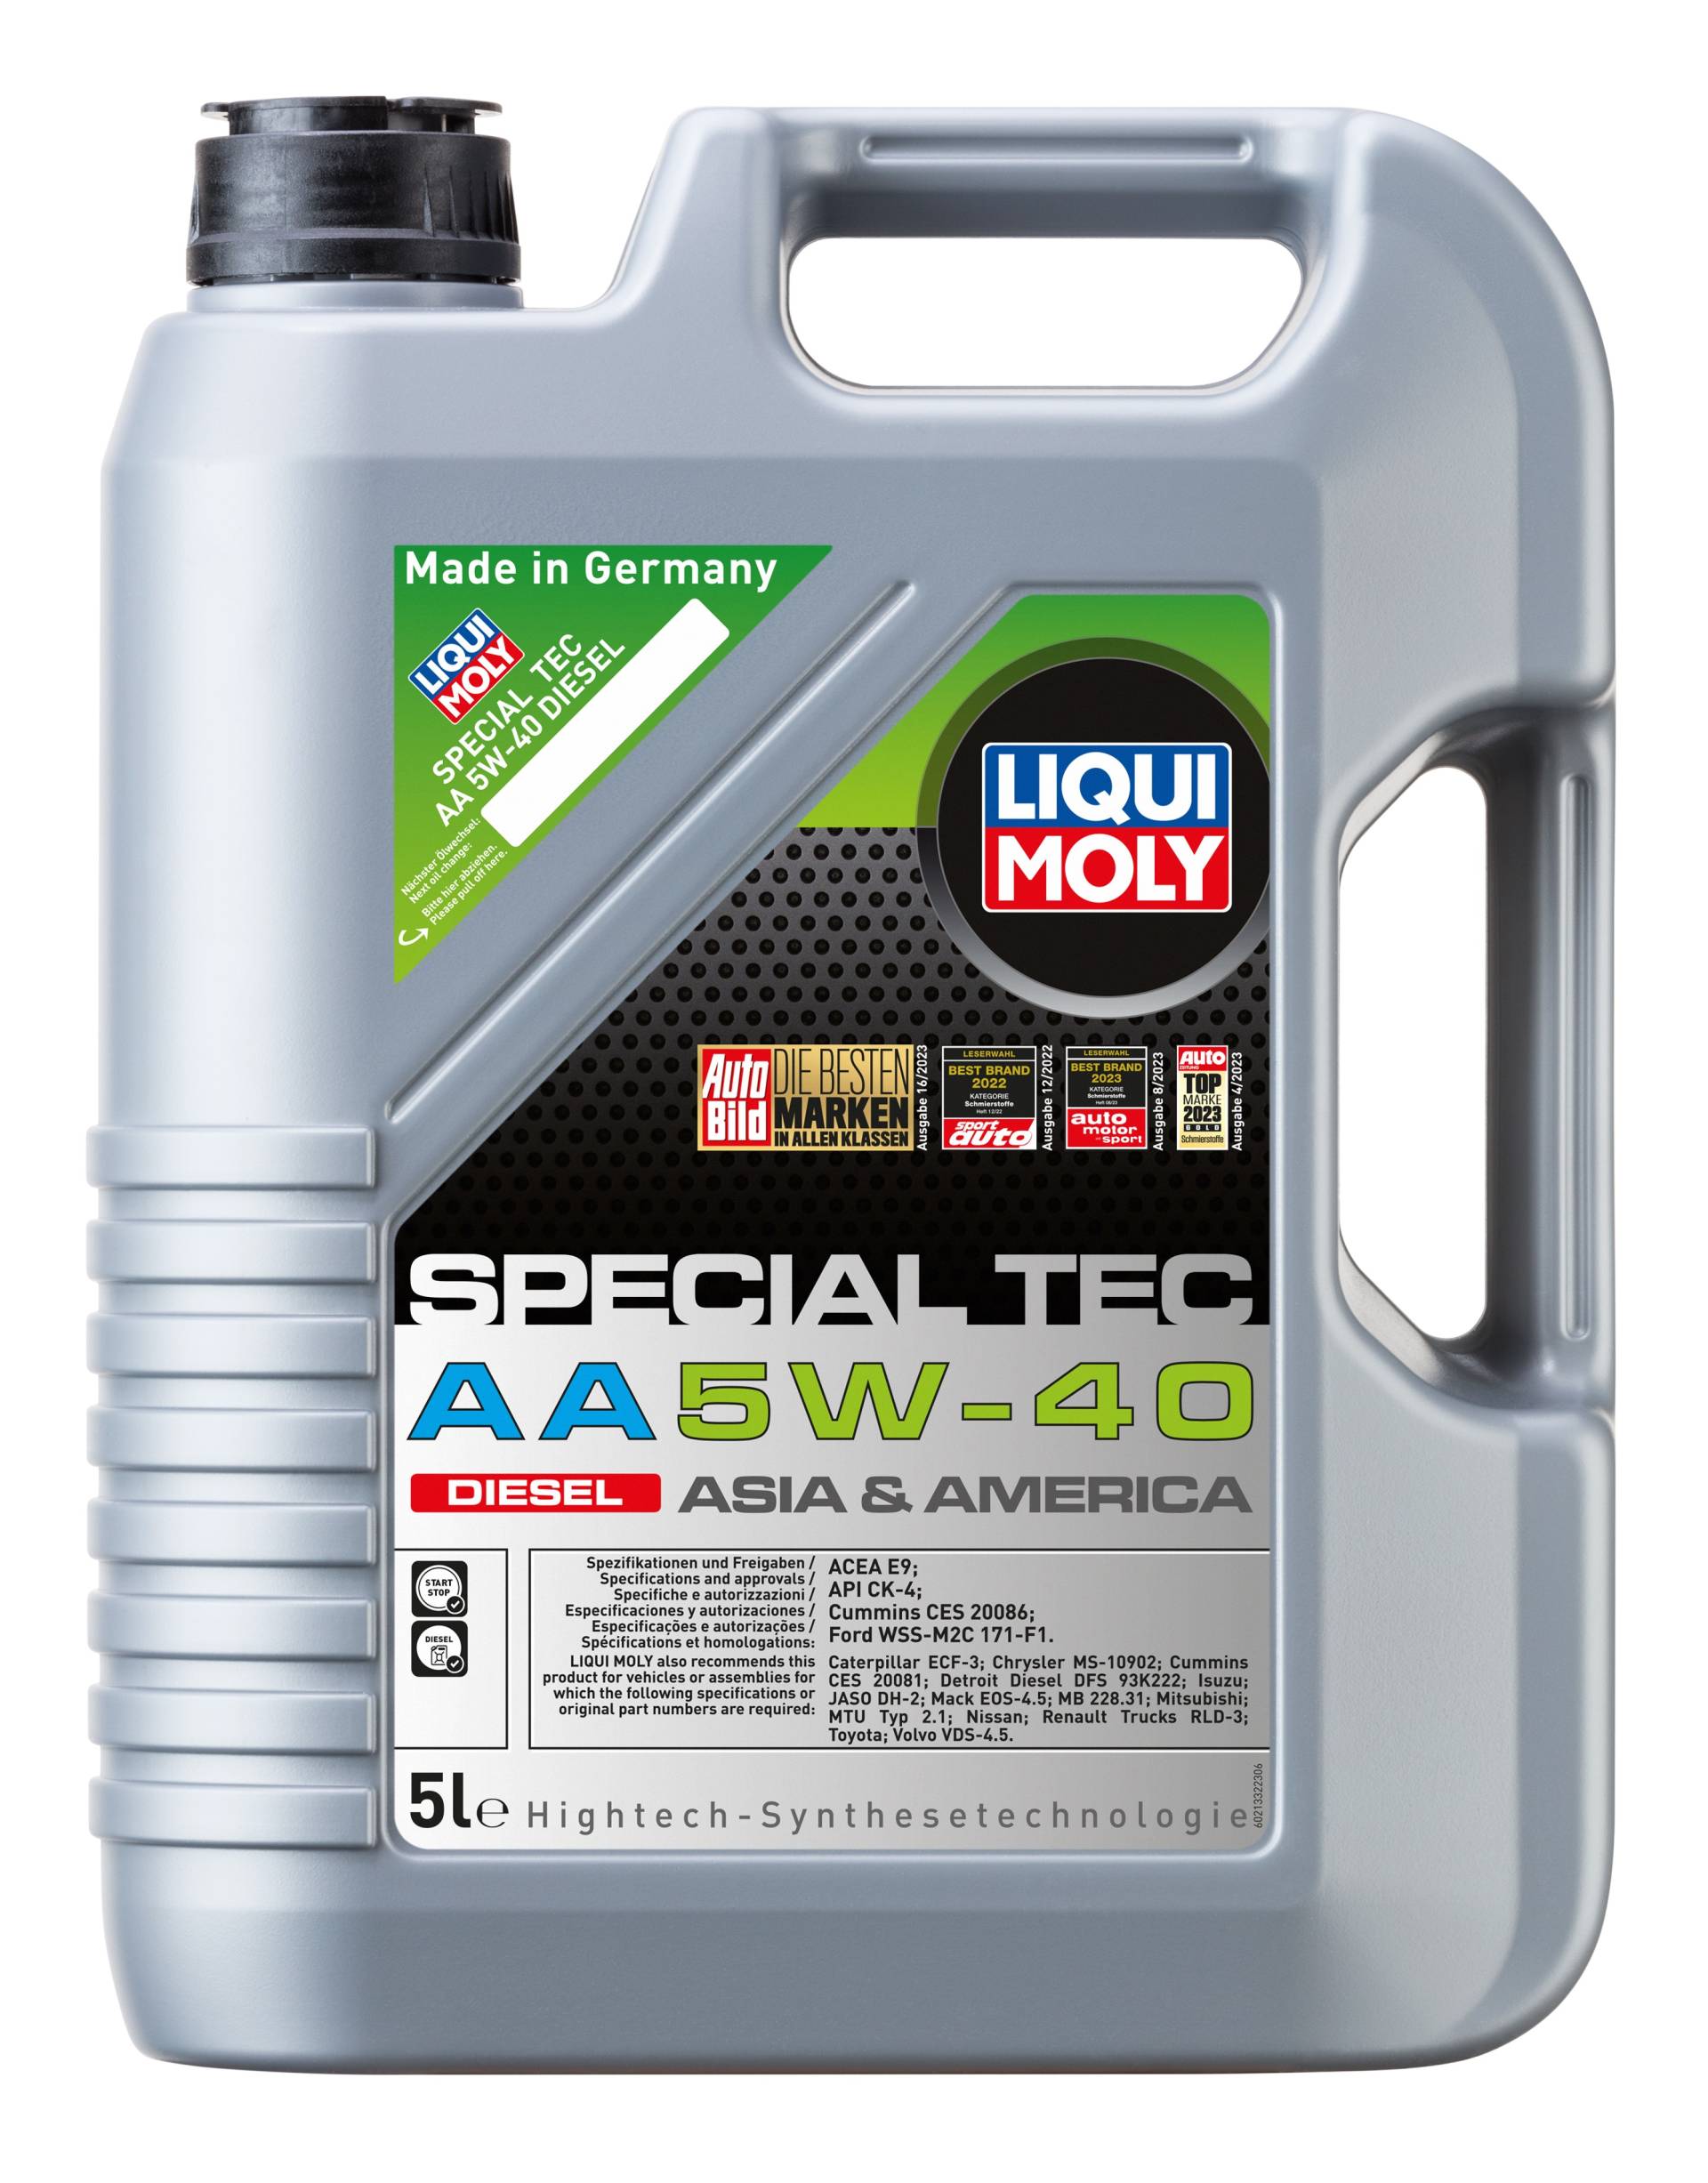 Liqui Moly Special Tec AA 5W-40 Diesel, 5 Liter von Liqui Moly